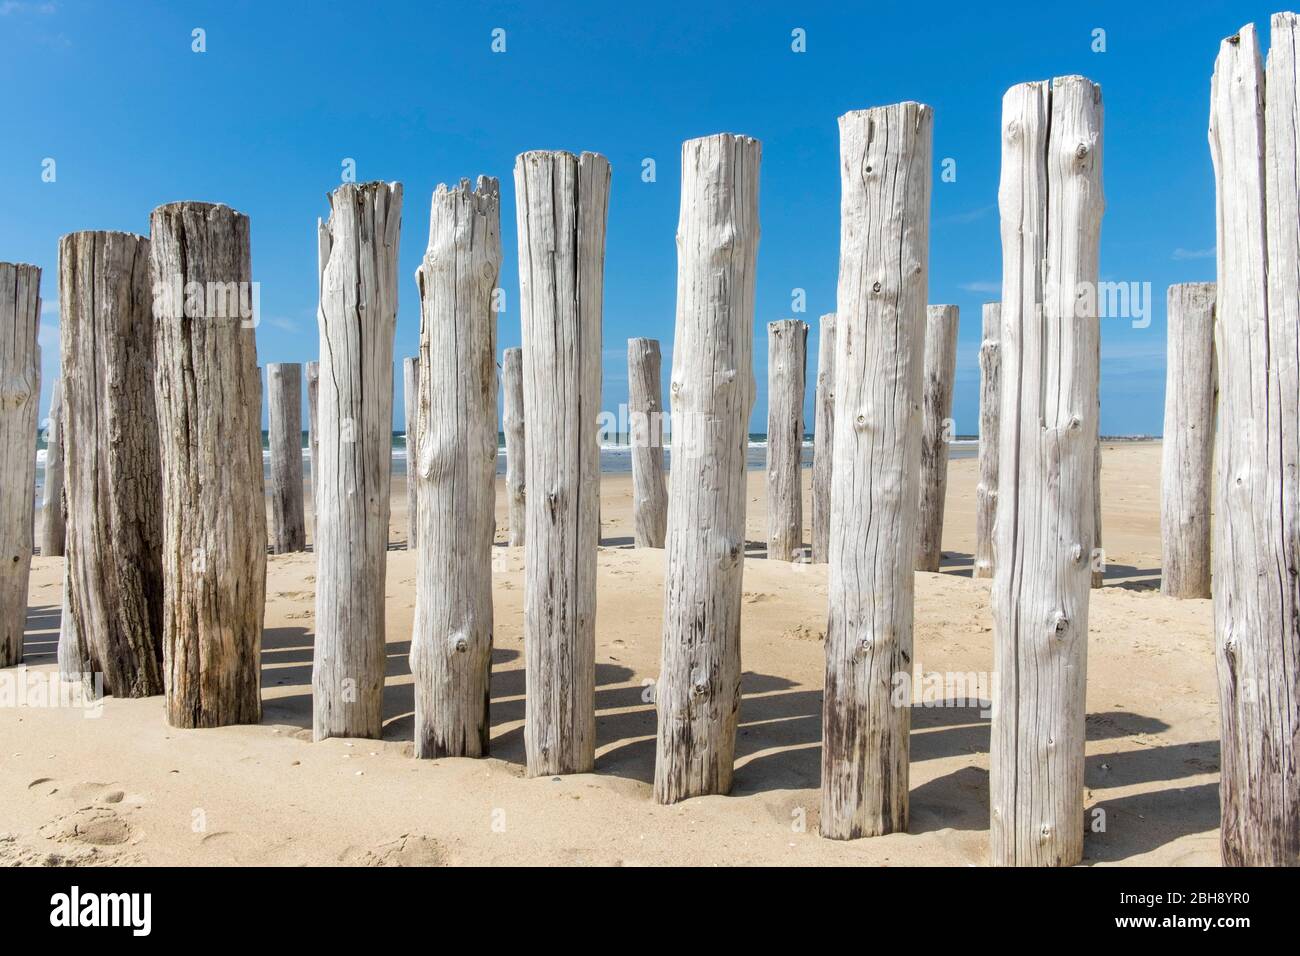 Holzpfähle in Holland mit Blick auf das Meer Banque D'Images